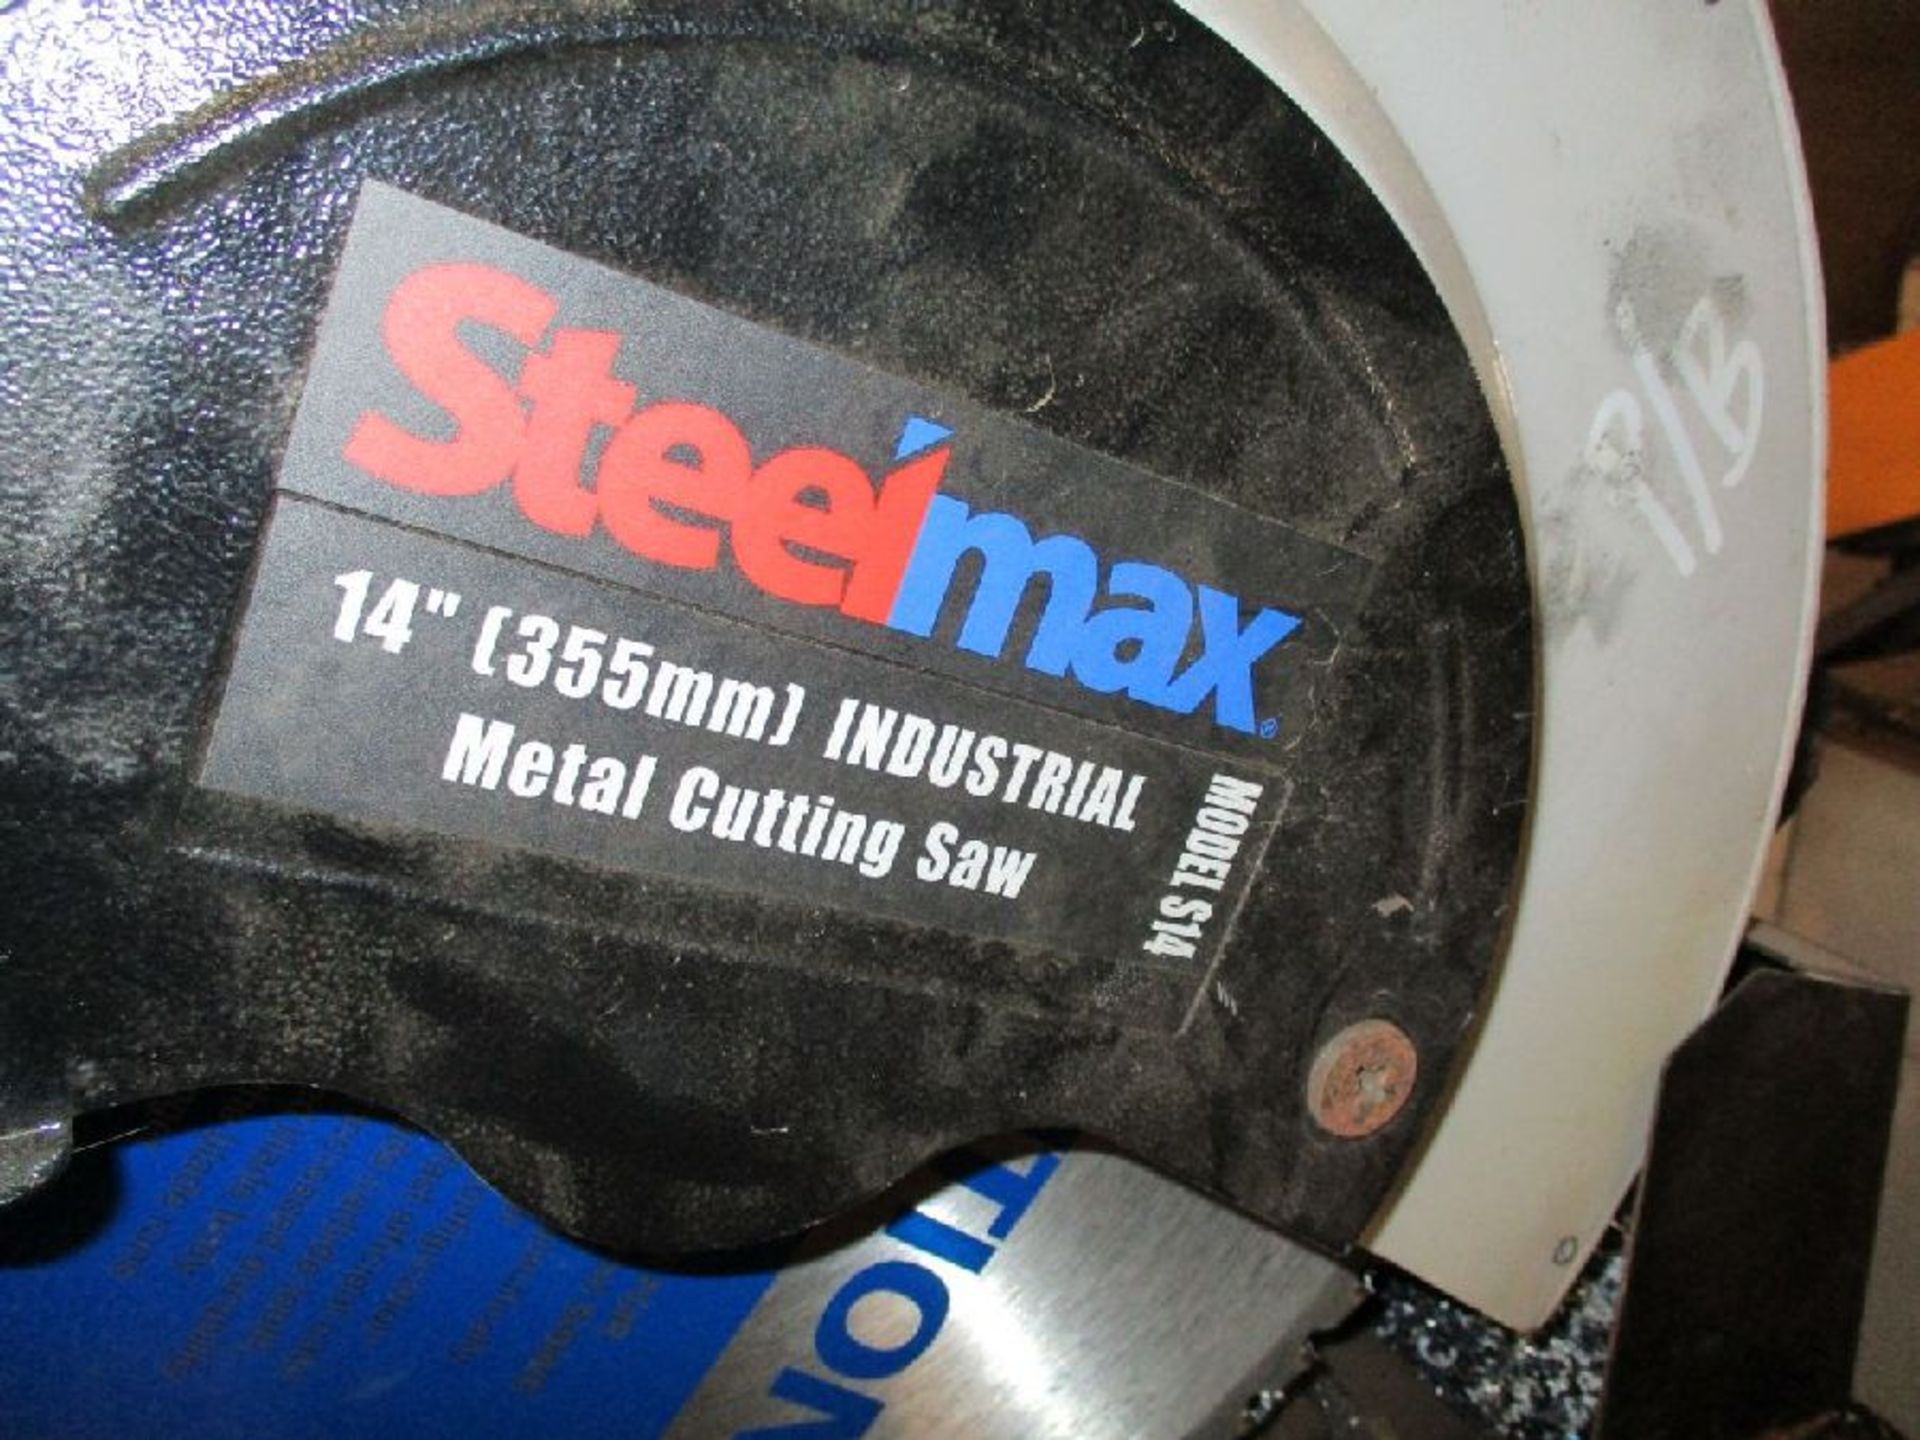 Steelmax Model S14 14" Electric Industrial Metal Cutting Circular Saw - Image 4 of 6